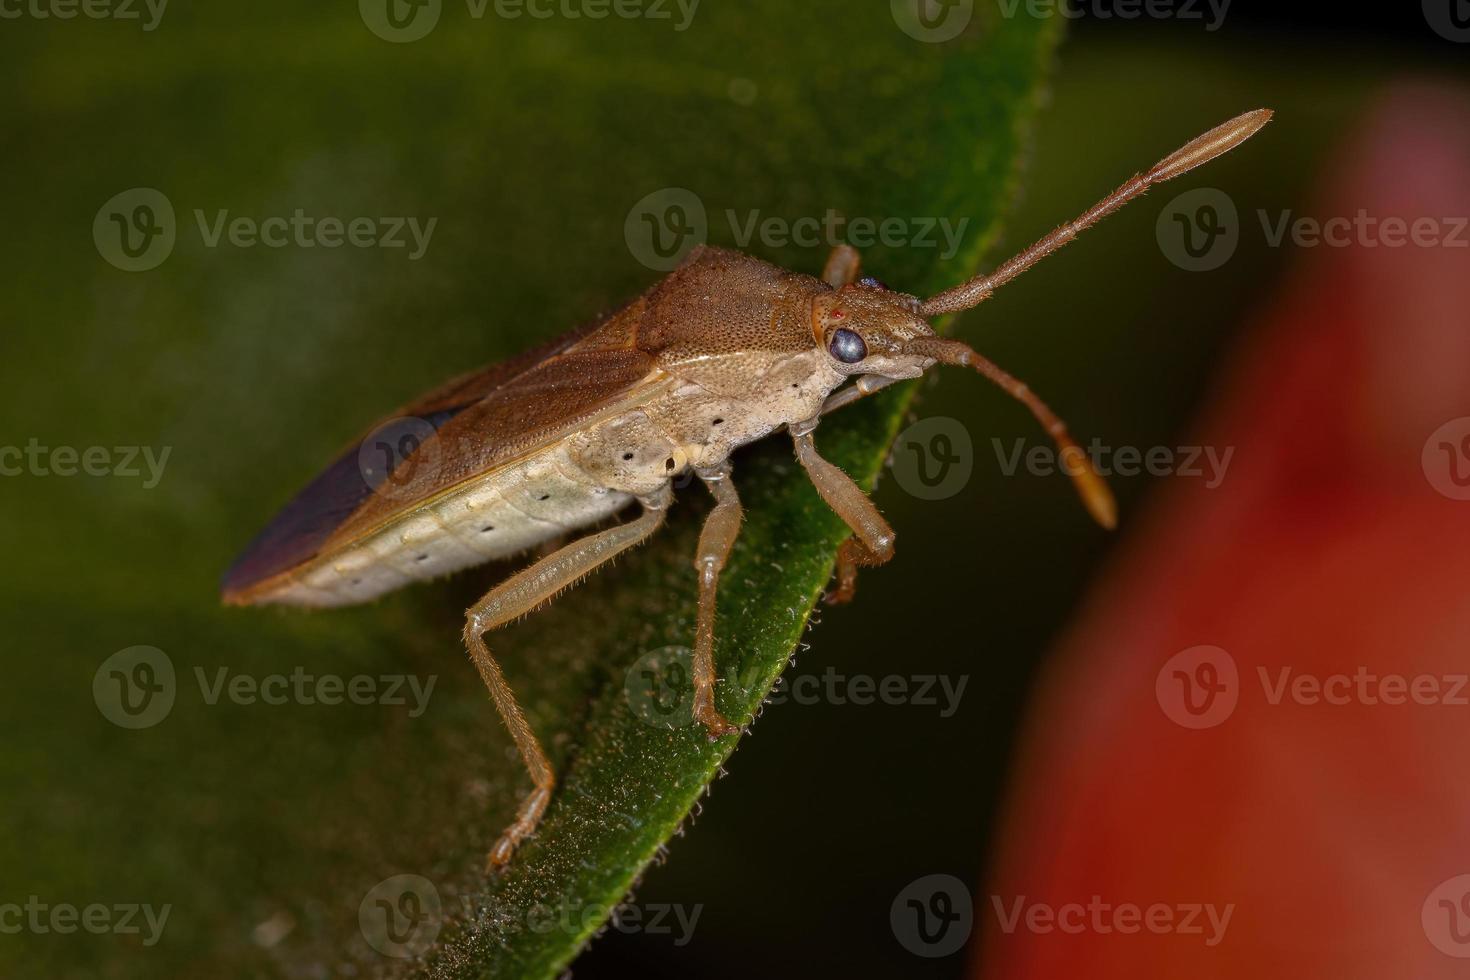 vuxen bladfotad insekt foto